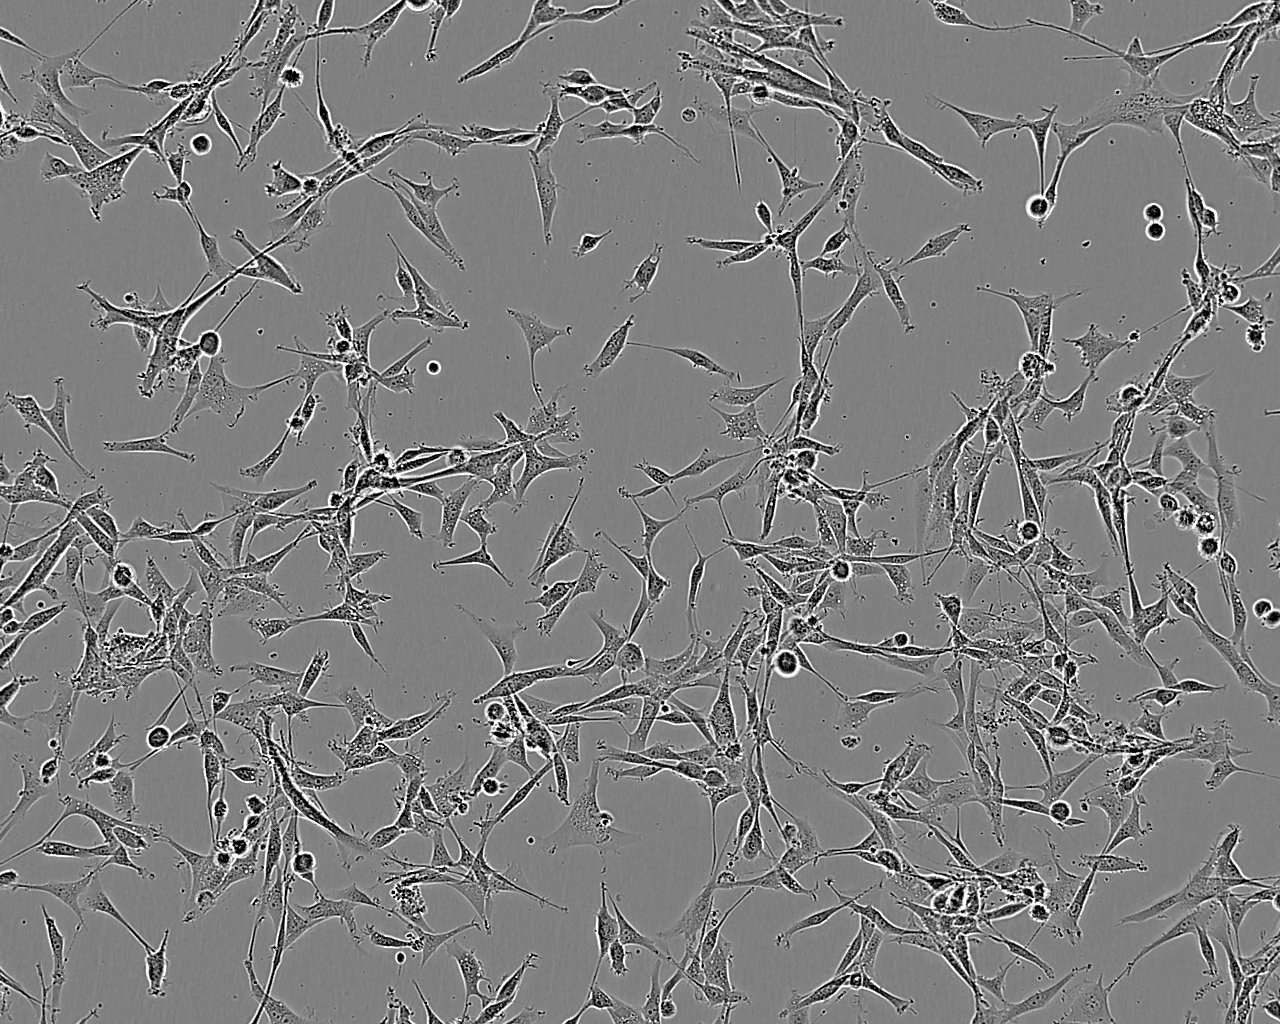 HeLa S3 epithelioid cells人宫颈癌细胞系,HeLa S3 epithelioid cells